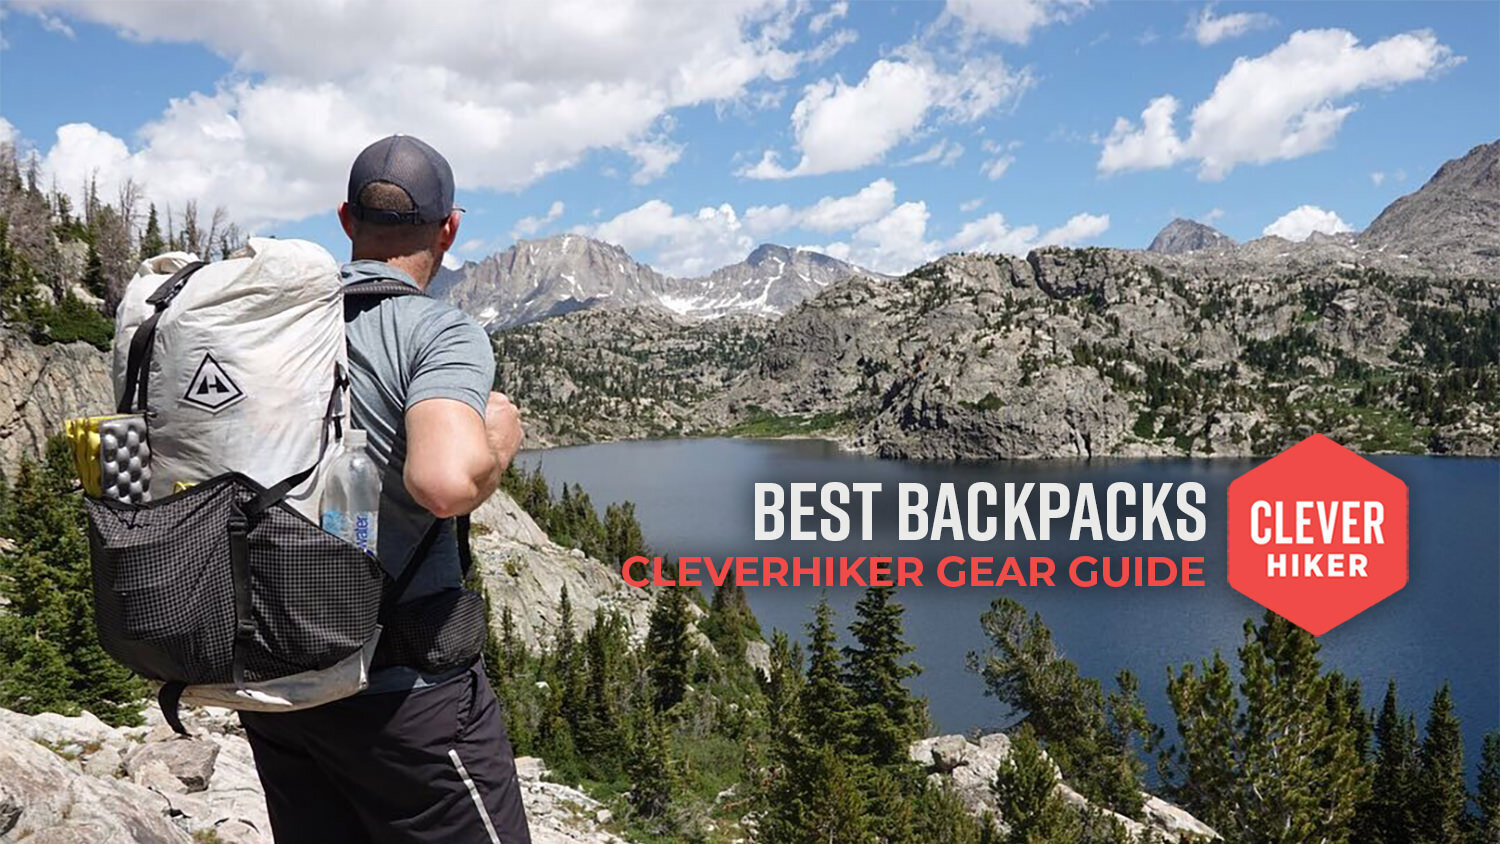 Large Backpack Rucksack Hiking Outdoor Camping Travel Day Pack Climbing Trekking